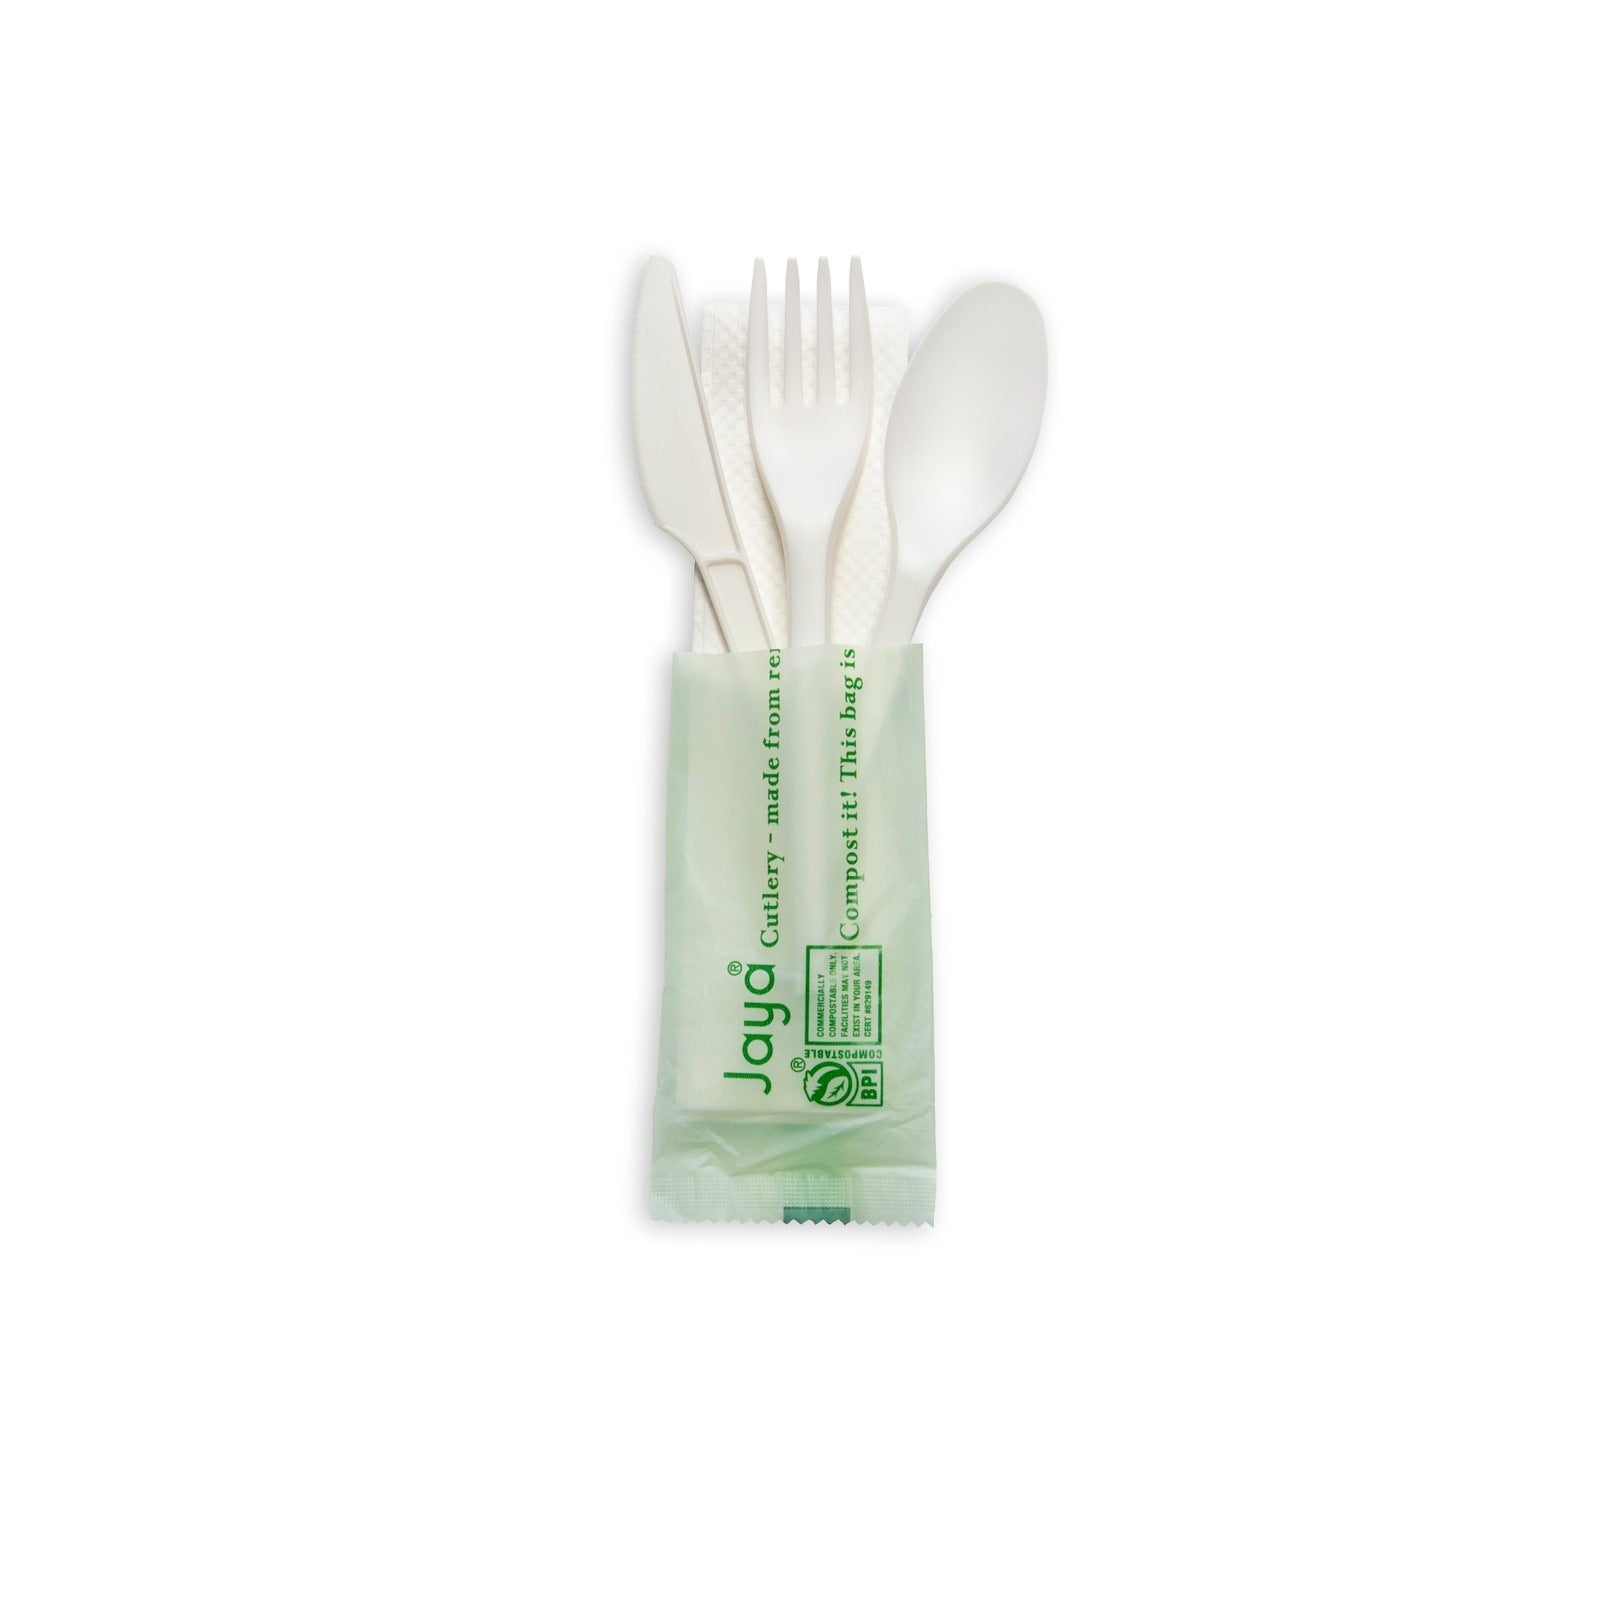 Compostable Plastic Knife Disposable White Plastic Knife